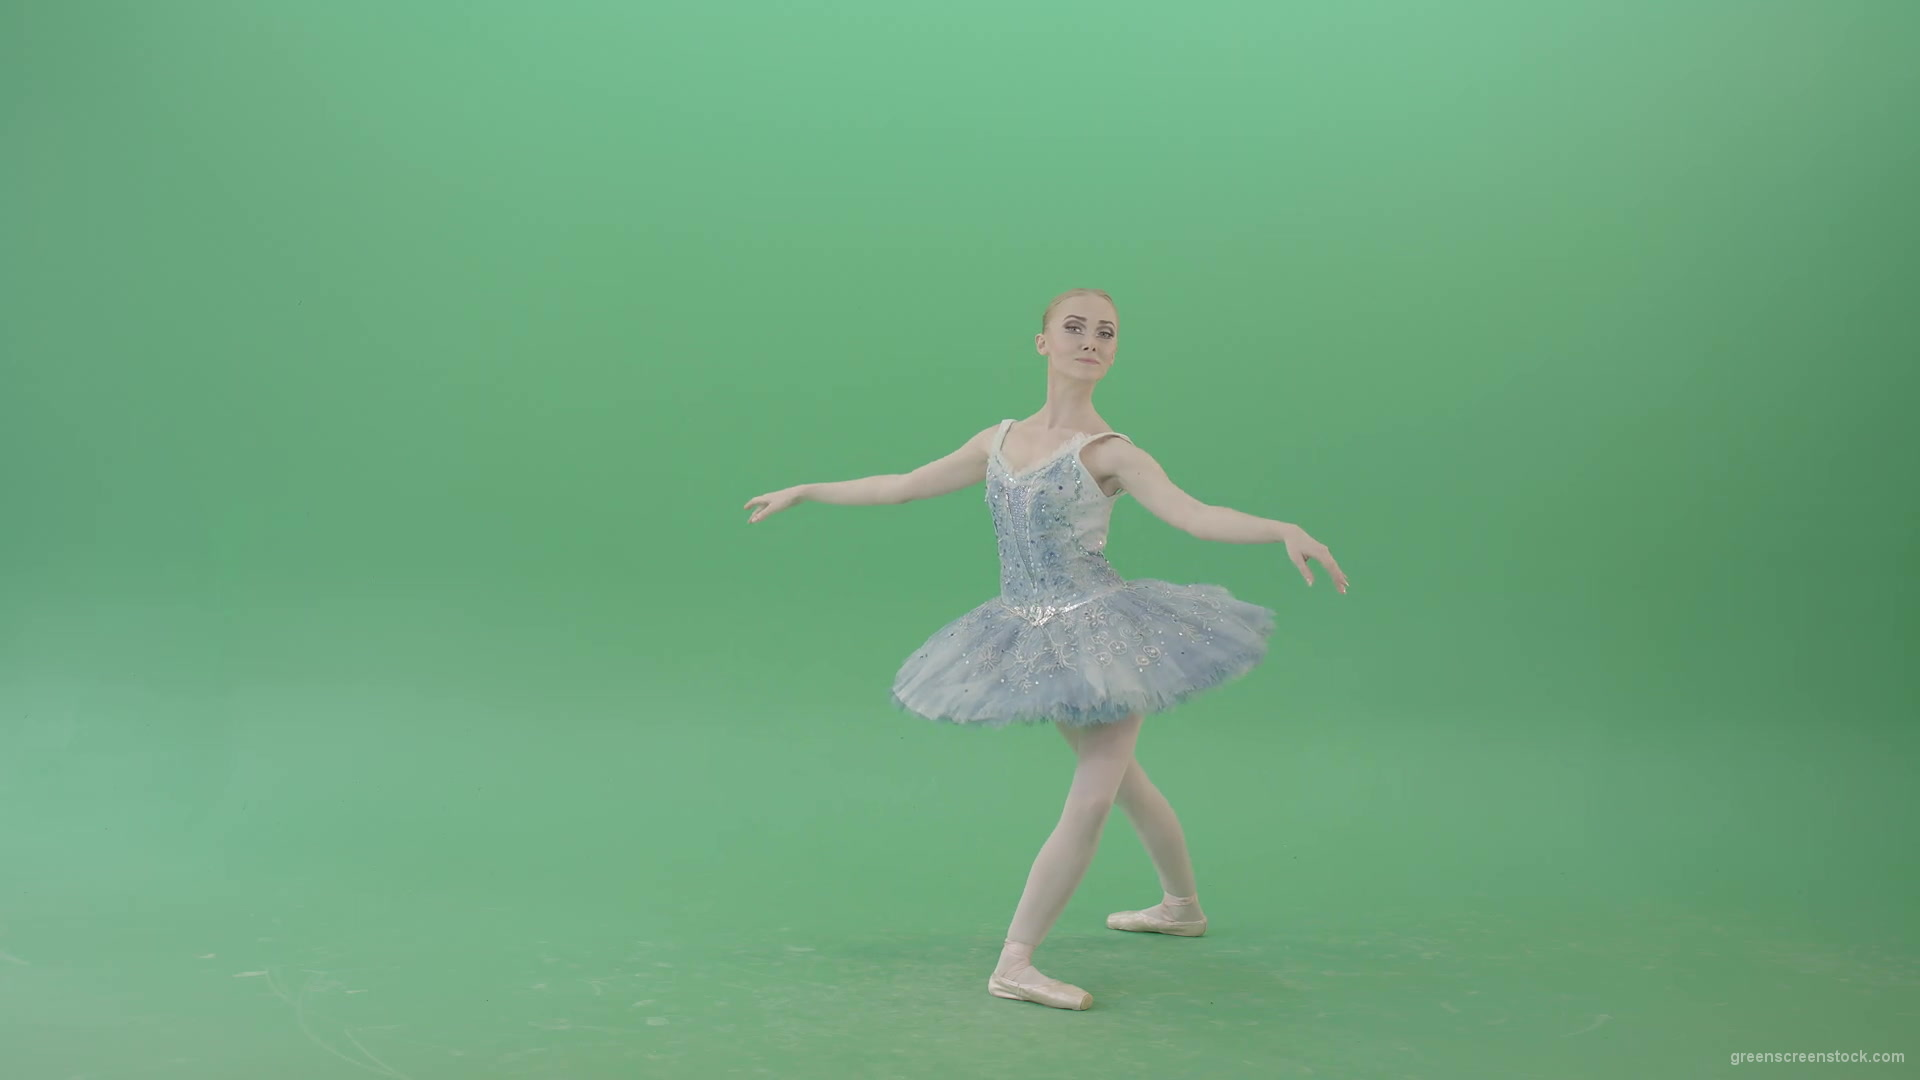 Beauty-blonde-ballerin-ballet-dancing-girl-in-blue-dress-spinning-over-green-screen-4K-Video-Footag-30fps-1920_008 Green Screen Stock